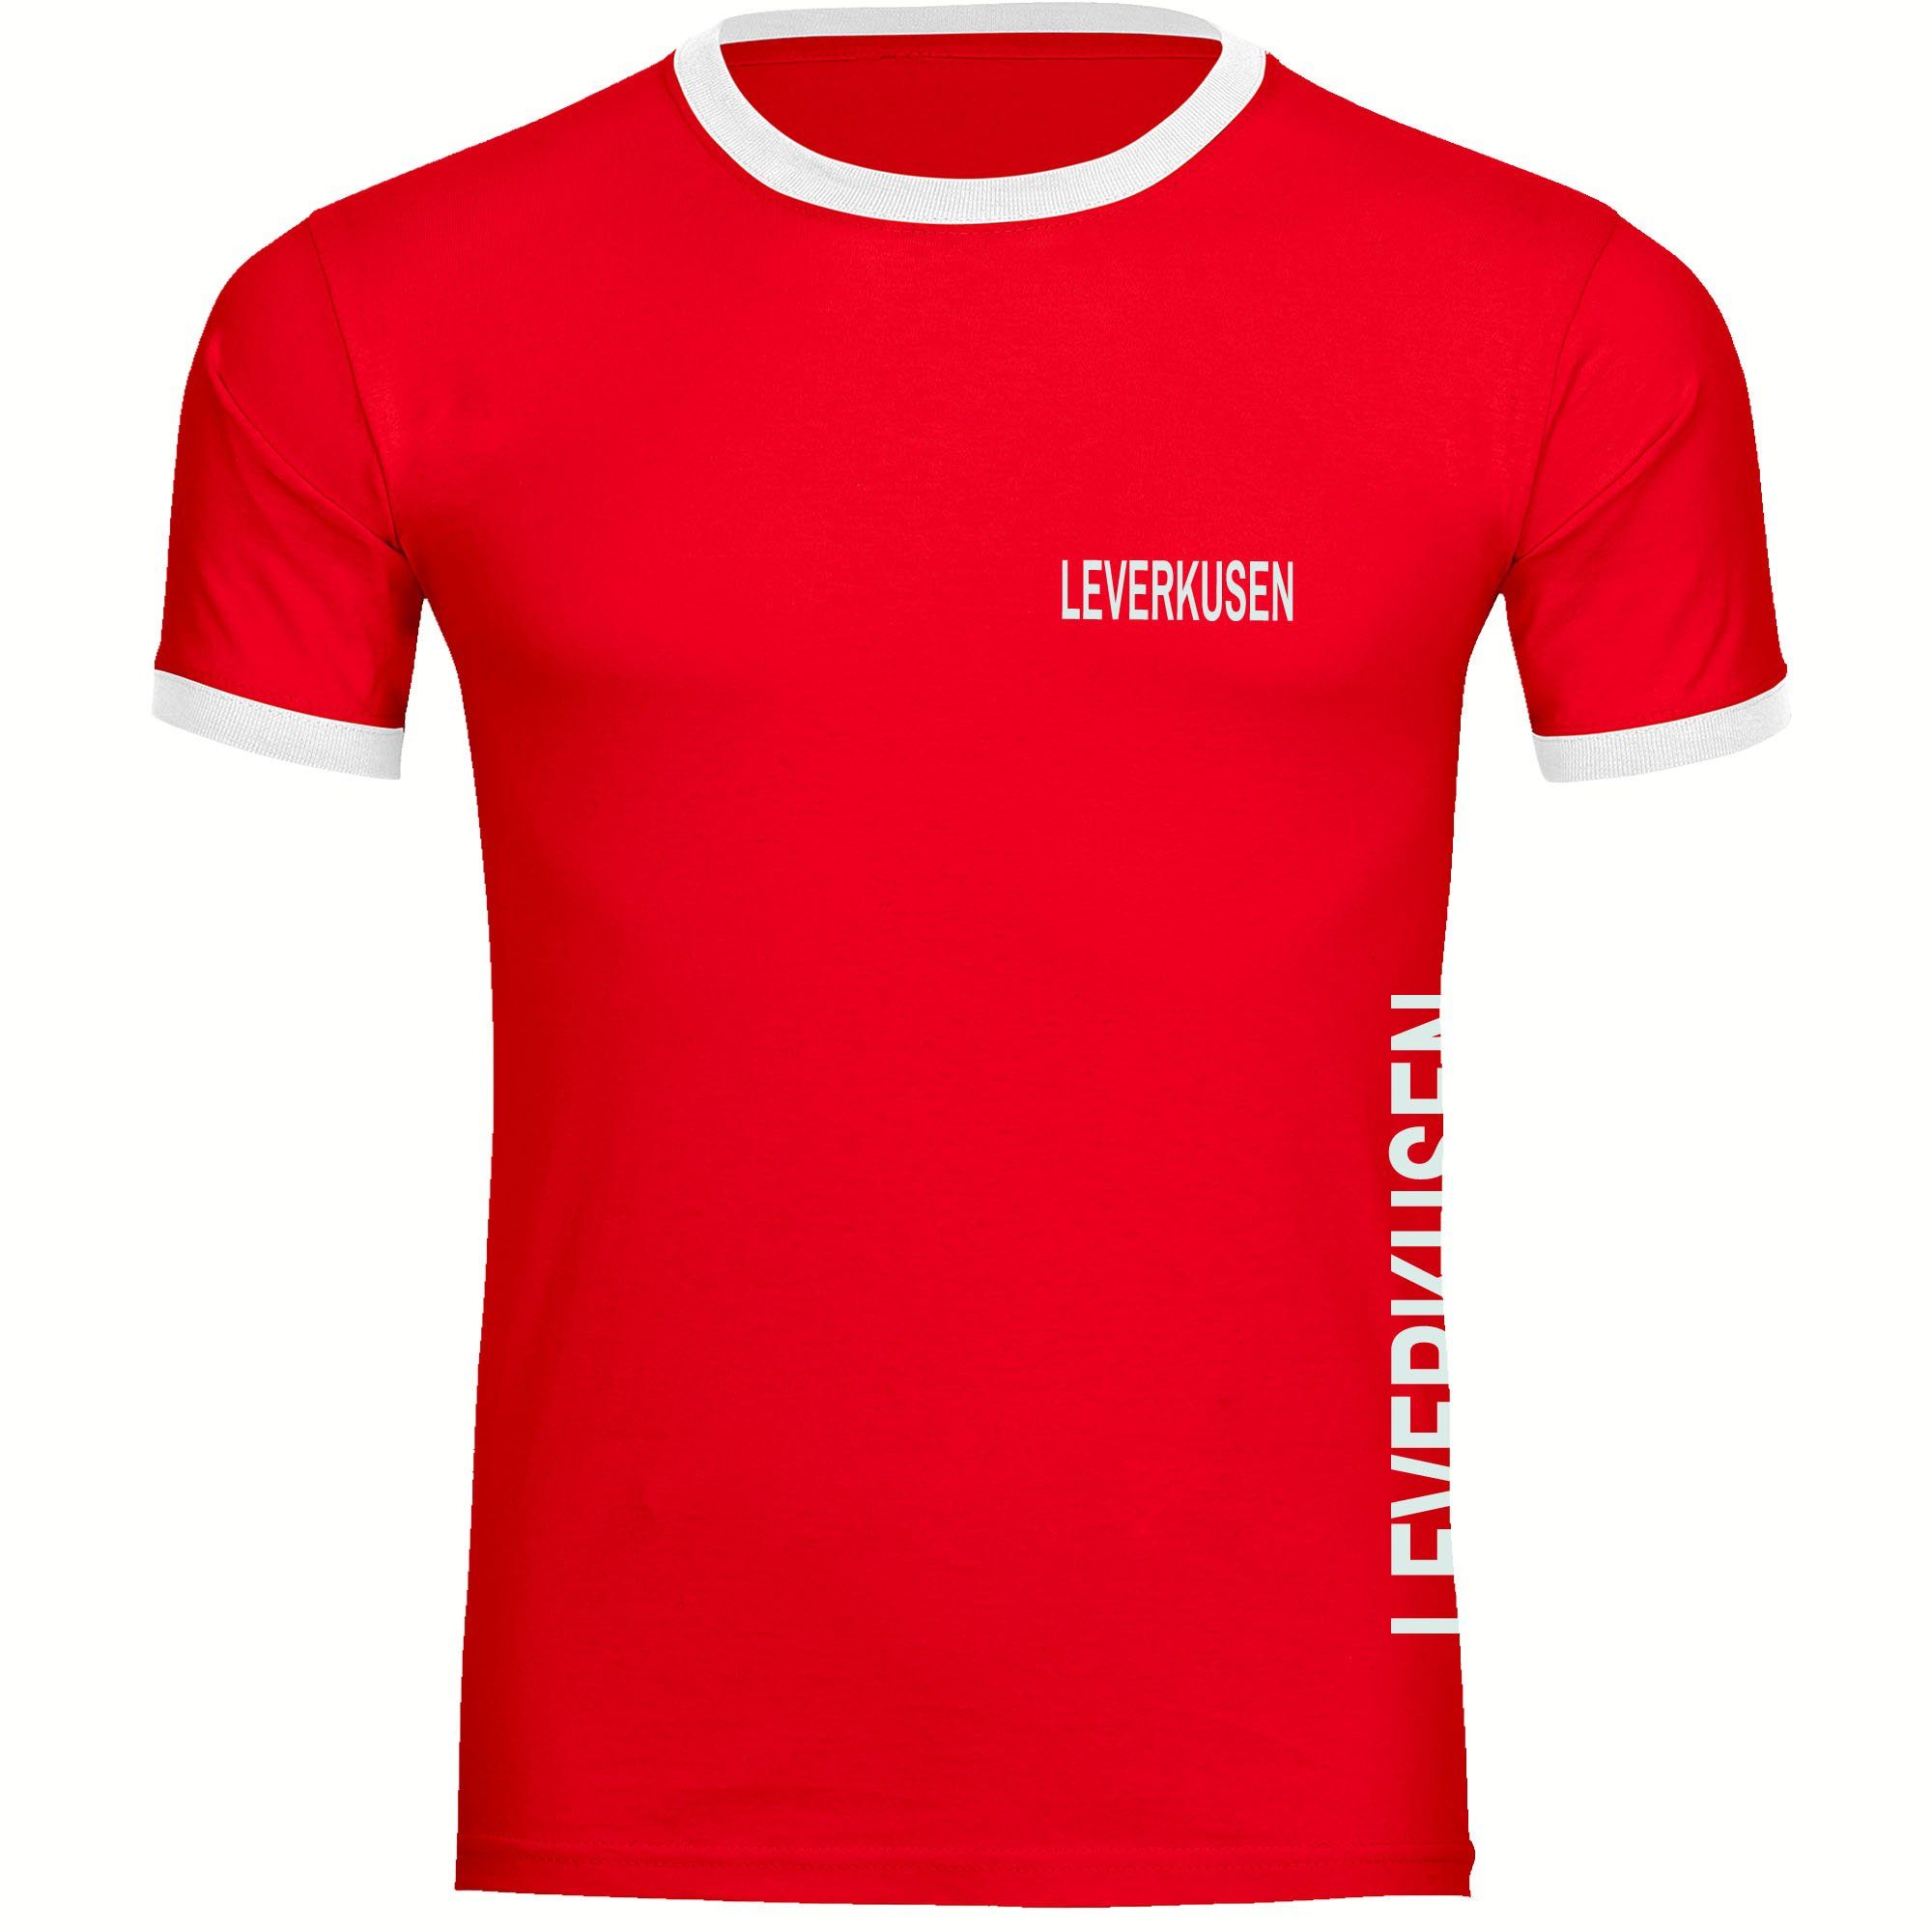 multifanshop T-Shirt Kontrast Leverkusen - Brust & Seite - Männer